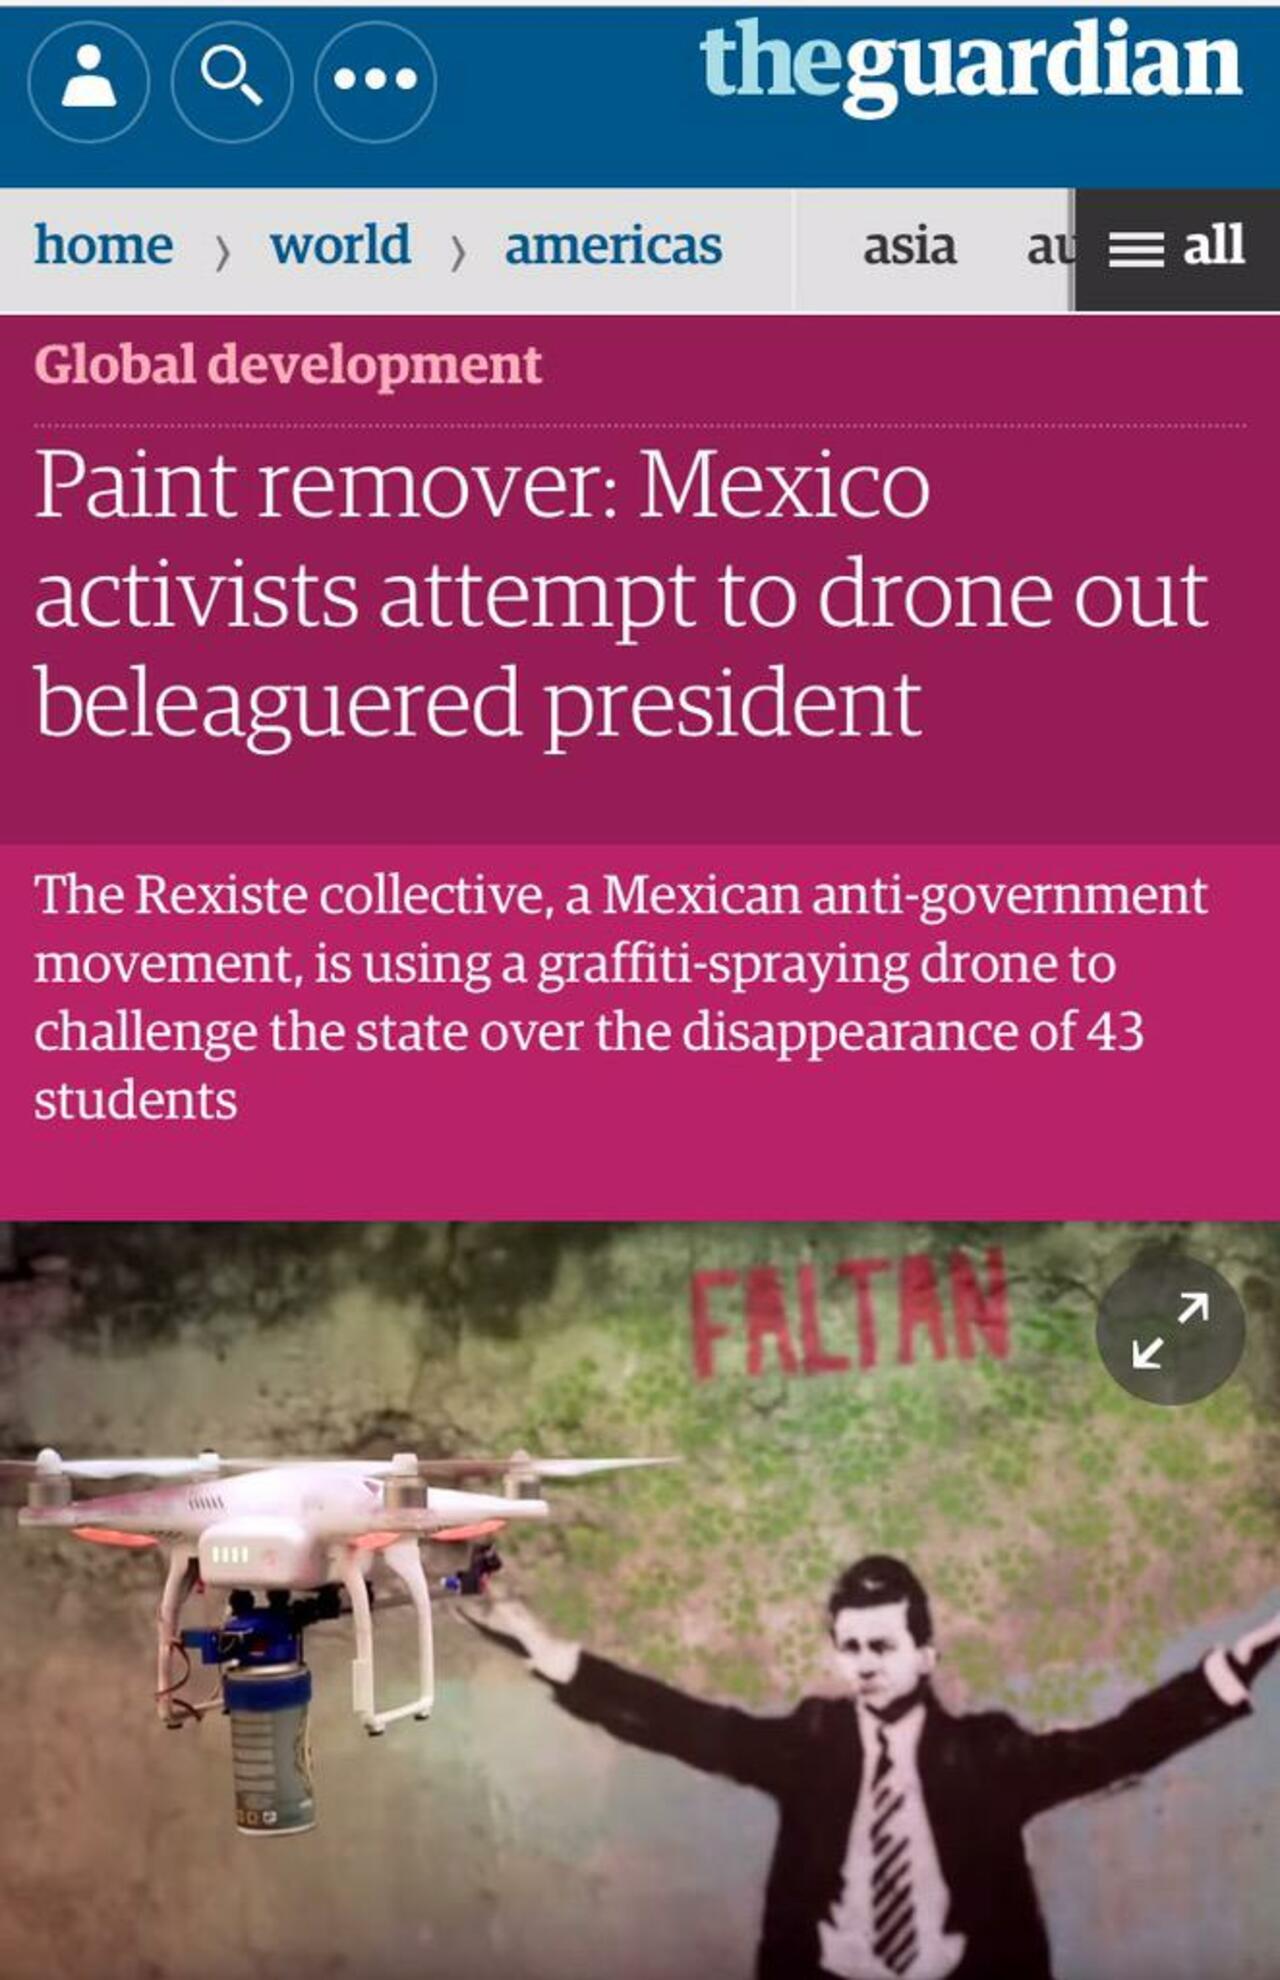 #Droncita "mex graffiti-spraying drone challenge the state" @guardian  #StreetArt #Graffiti http://www.theguardian.com/global-development/2015/oct/15/mexico-droncita-rexiste-collective-president-enrique-pena-nieto http://t.co/90oOhy8xyu